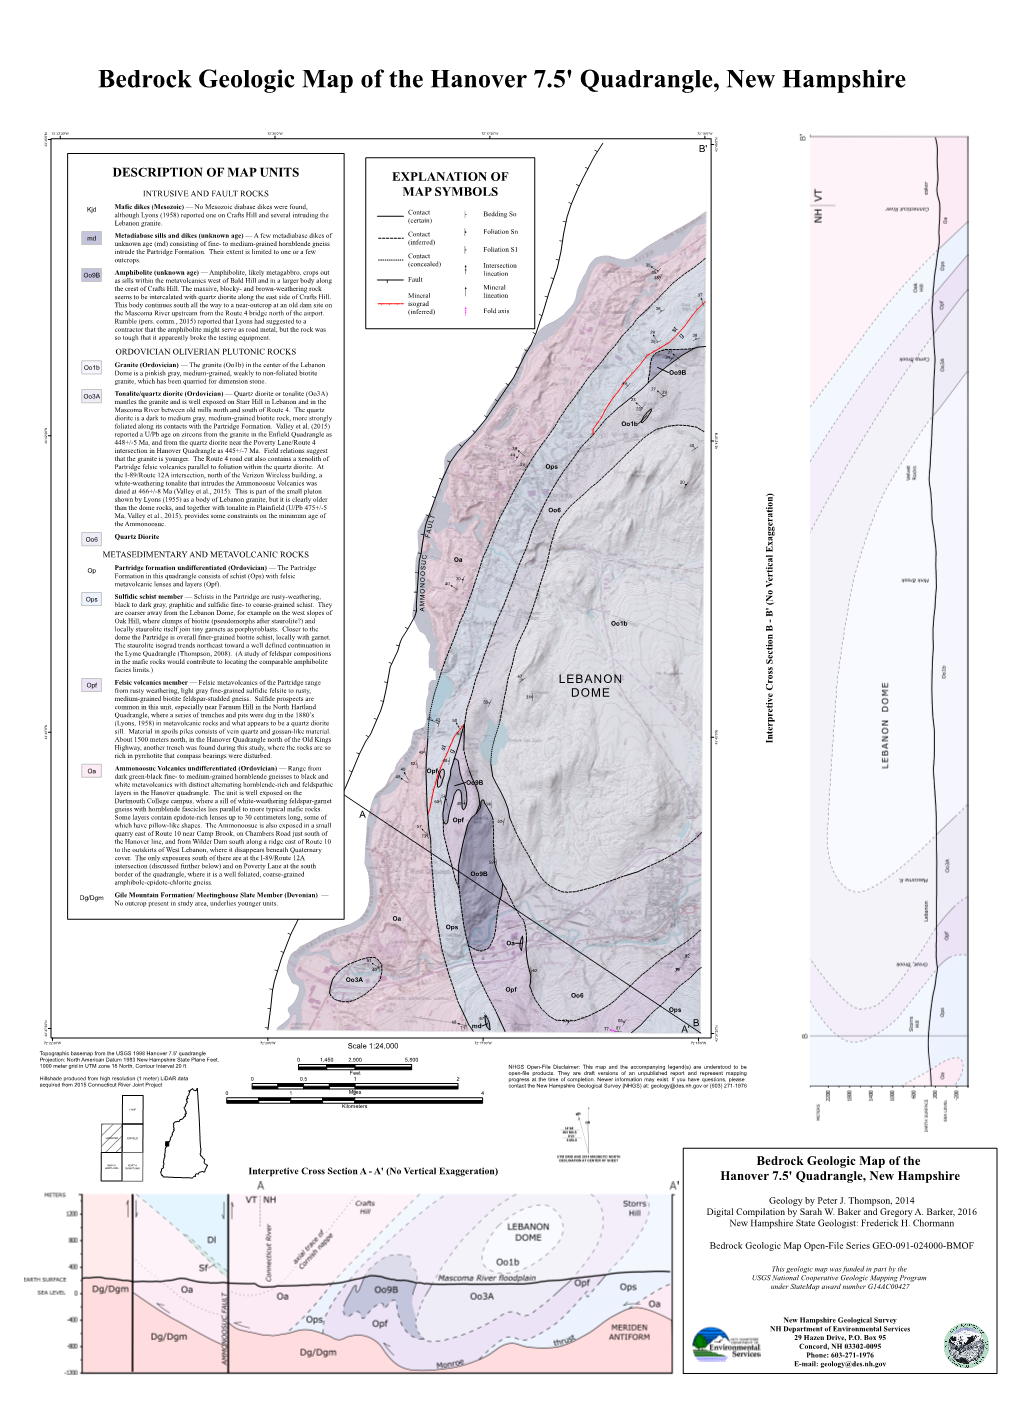 Bedrock Geologic Map of the Hanover 7.5' Quadrangle, New Hampshire N